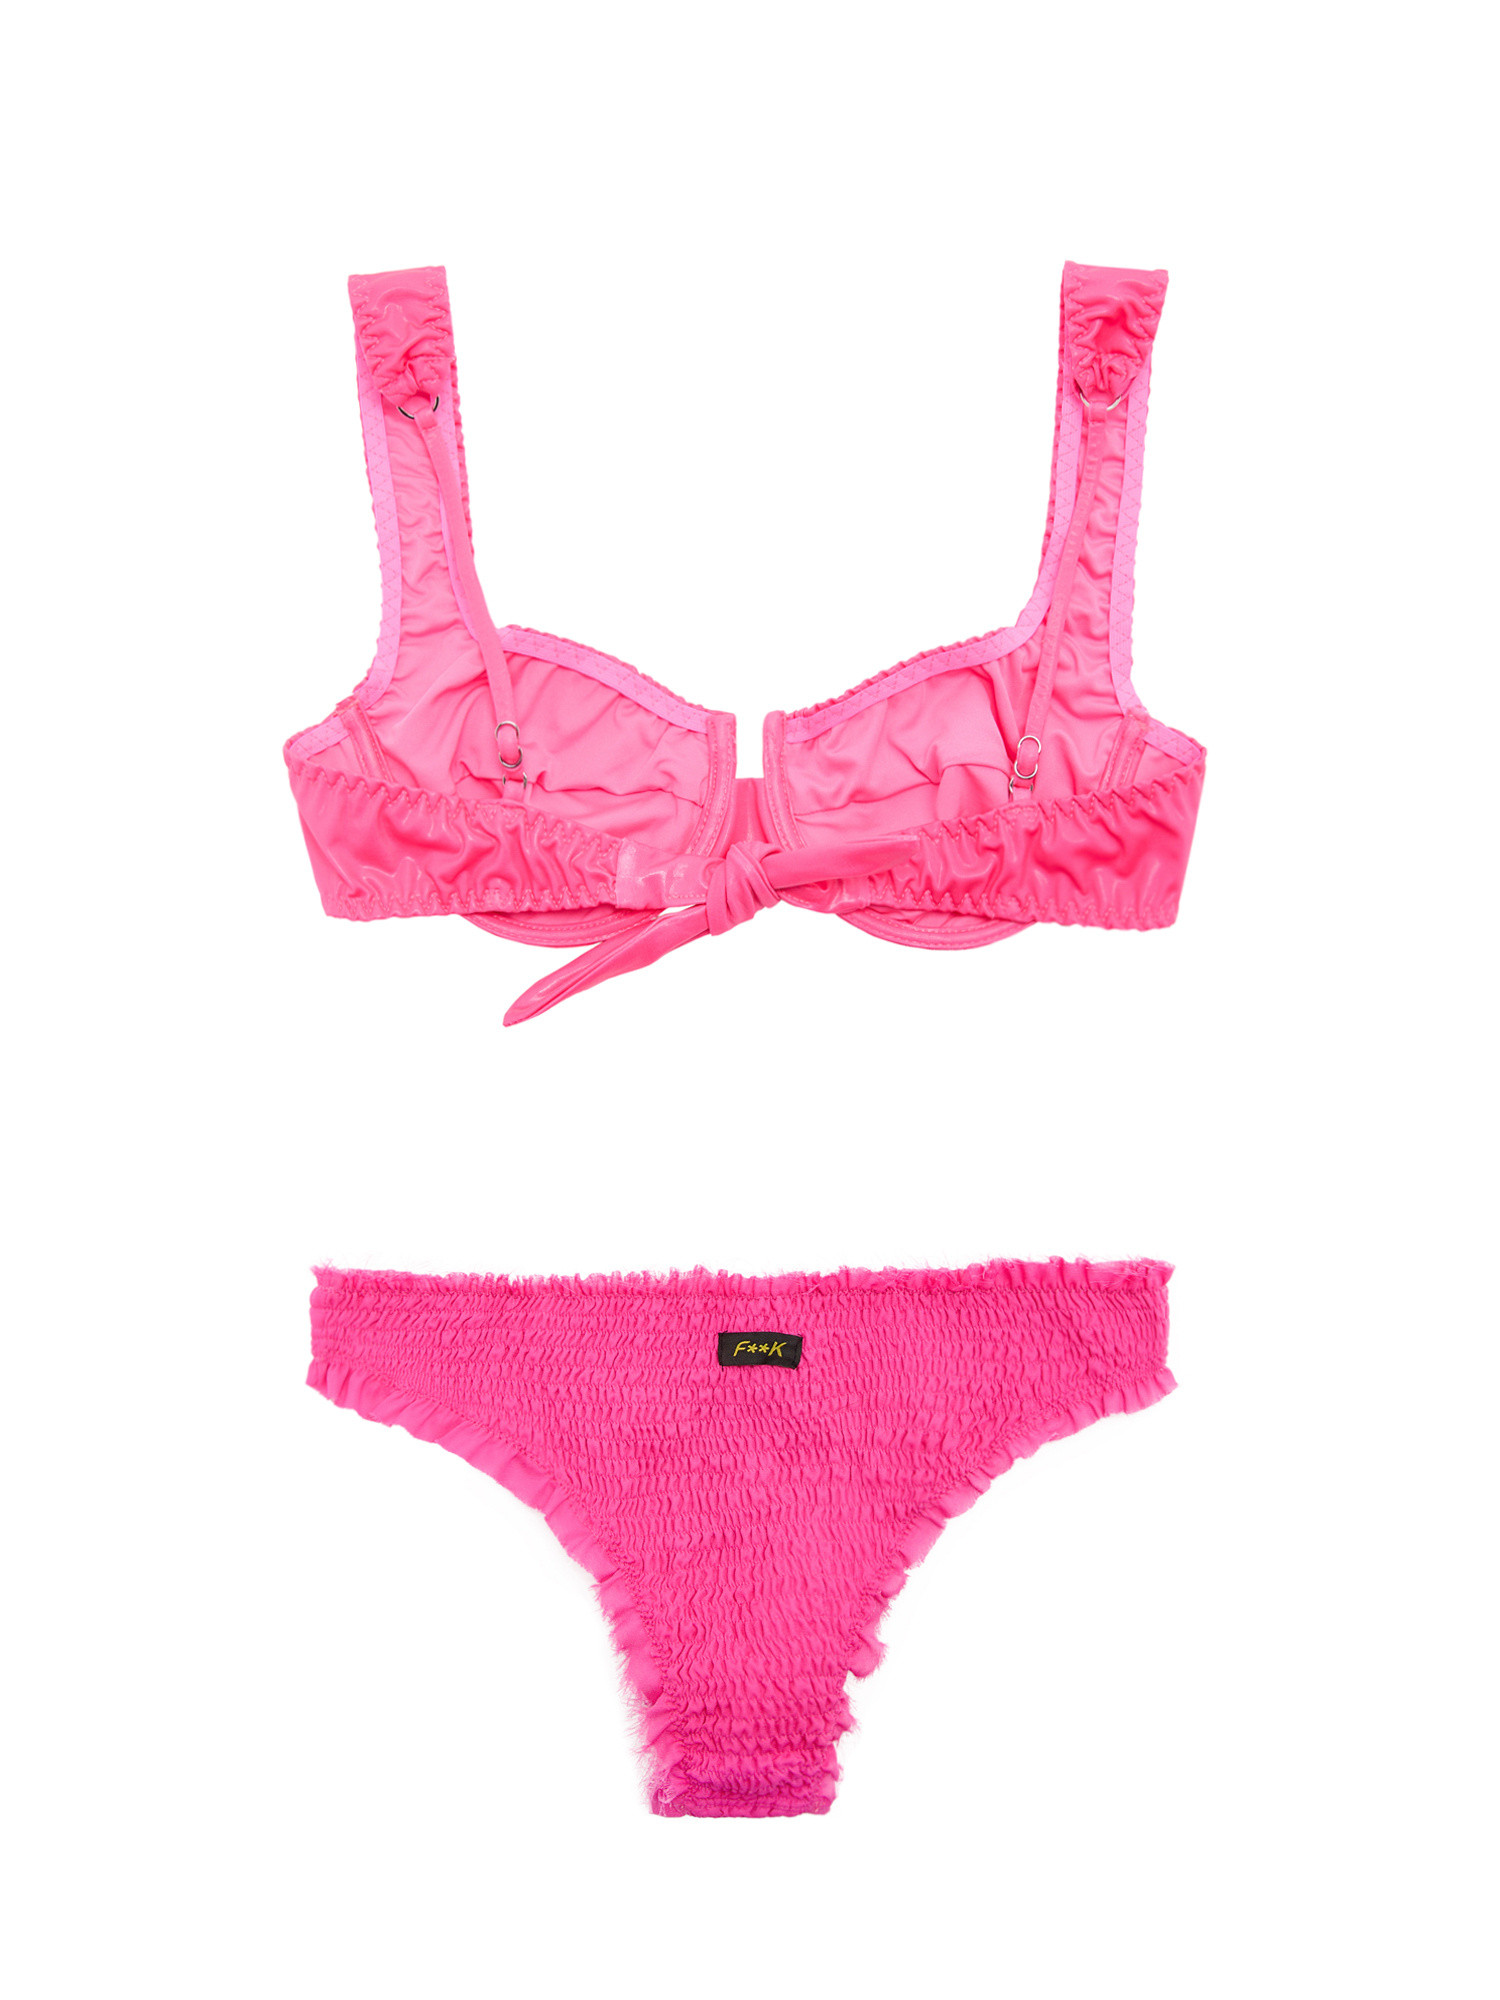 F**K - Bikini with underwire and Brazilian bottom, Pink Fuchsia, large image number 1